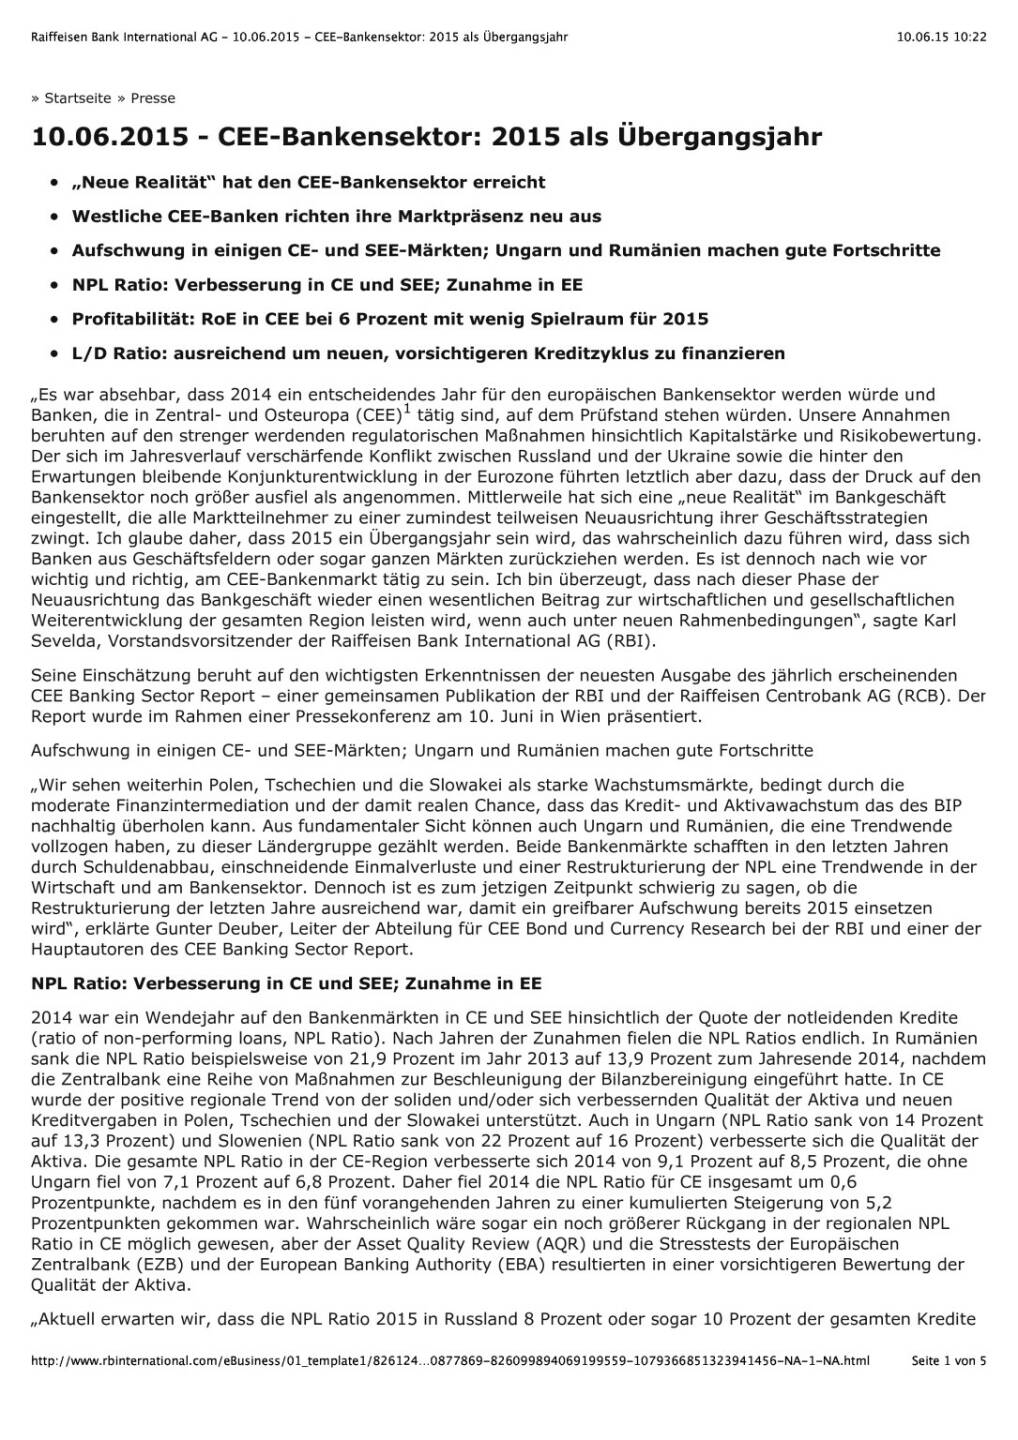 RBI CEE-Bankensektorreport, Seite 1/5, komplettes Dokument unter http://boerse-social.com/static/uploads/file_111_rbi_cee-bankensektorreport.pdf